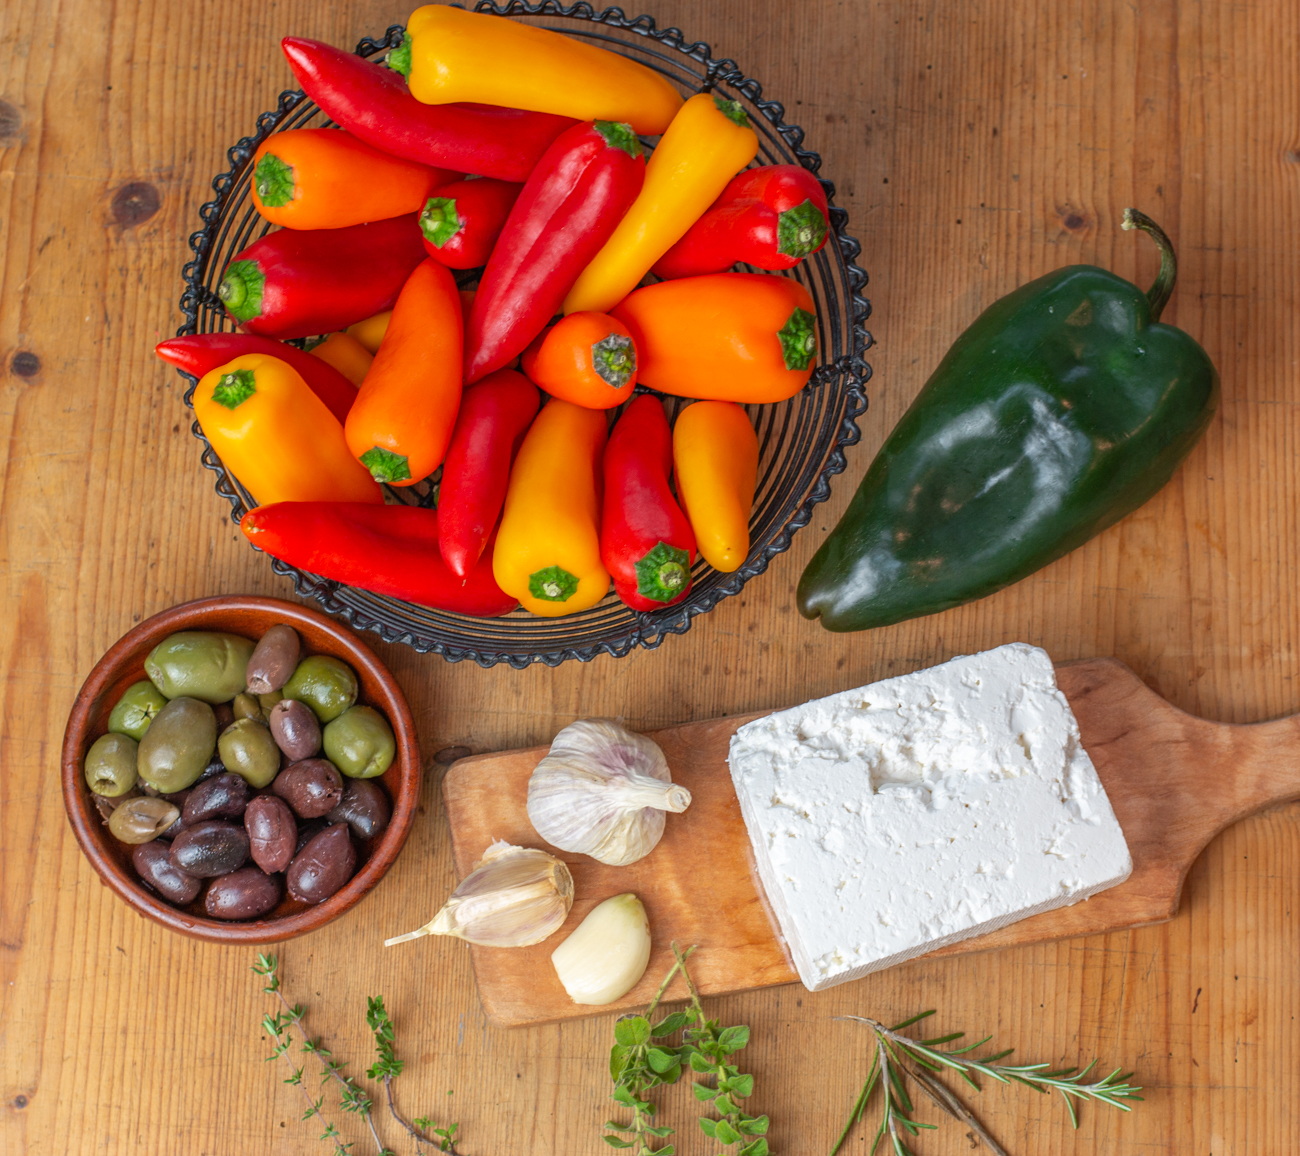 Ingredients for: Mediterranean Slow-Baked Feta & Pepper Appetizer